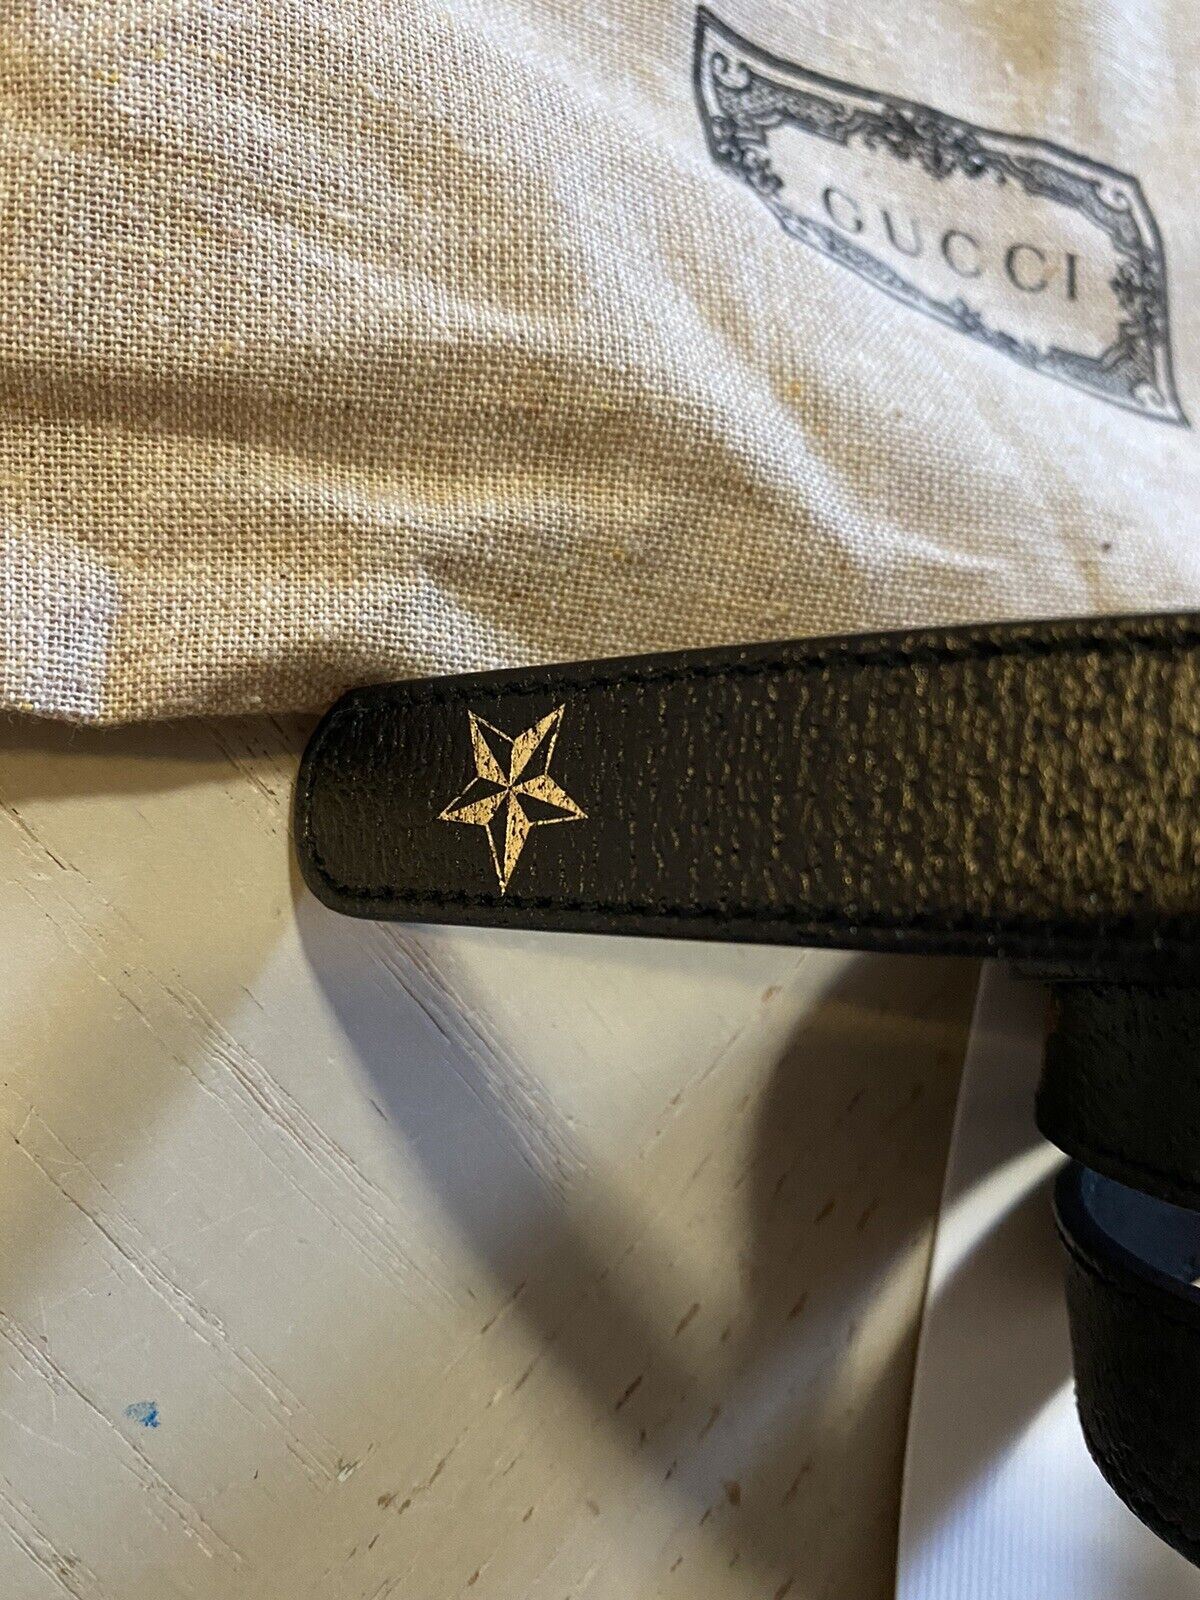 New Gucci Men’s Genuine Leather Bee Monogram Belt Black 85/34 Italy